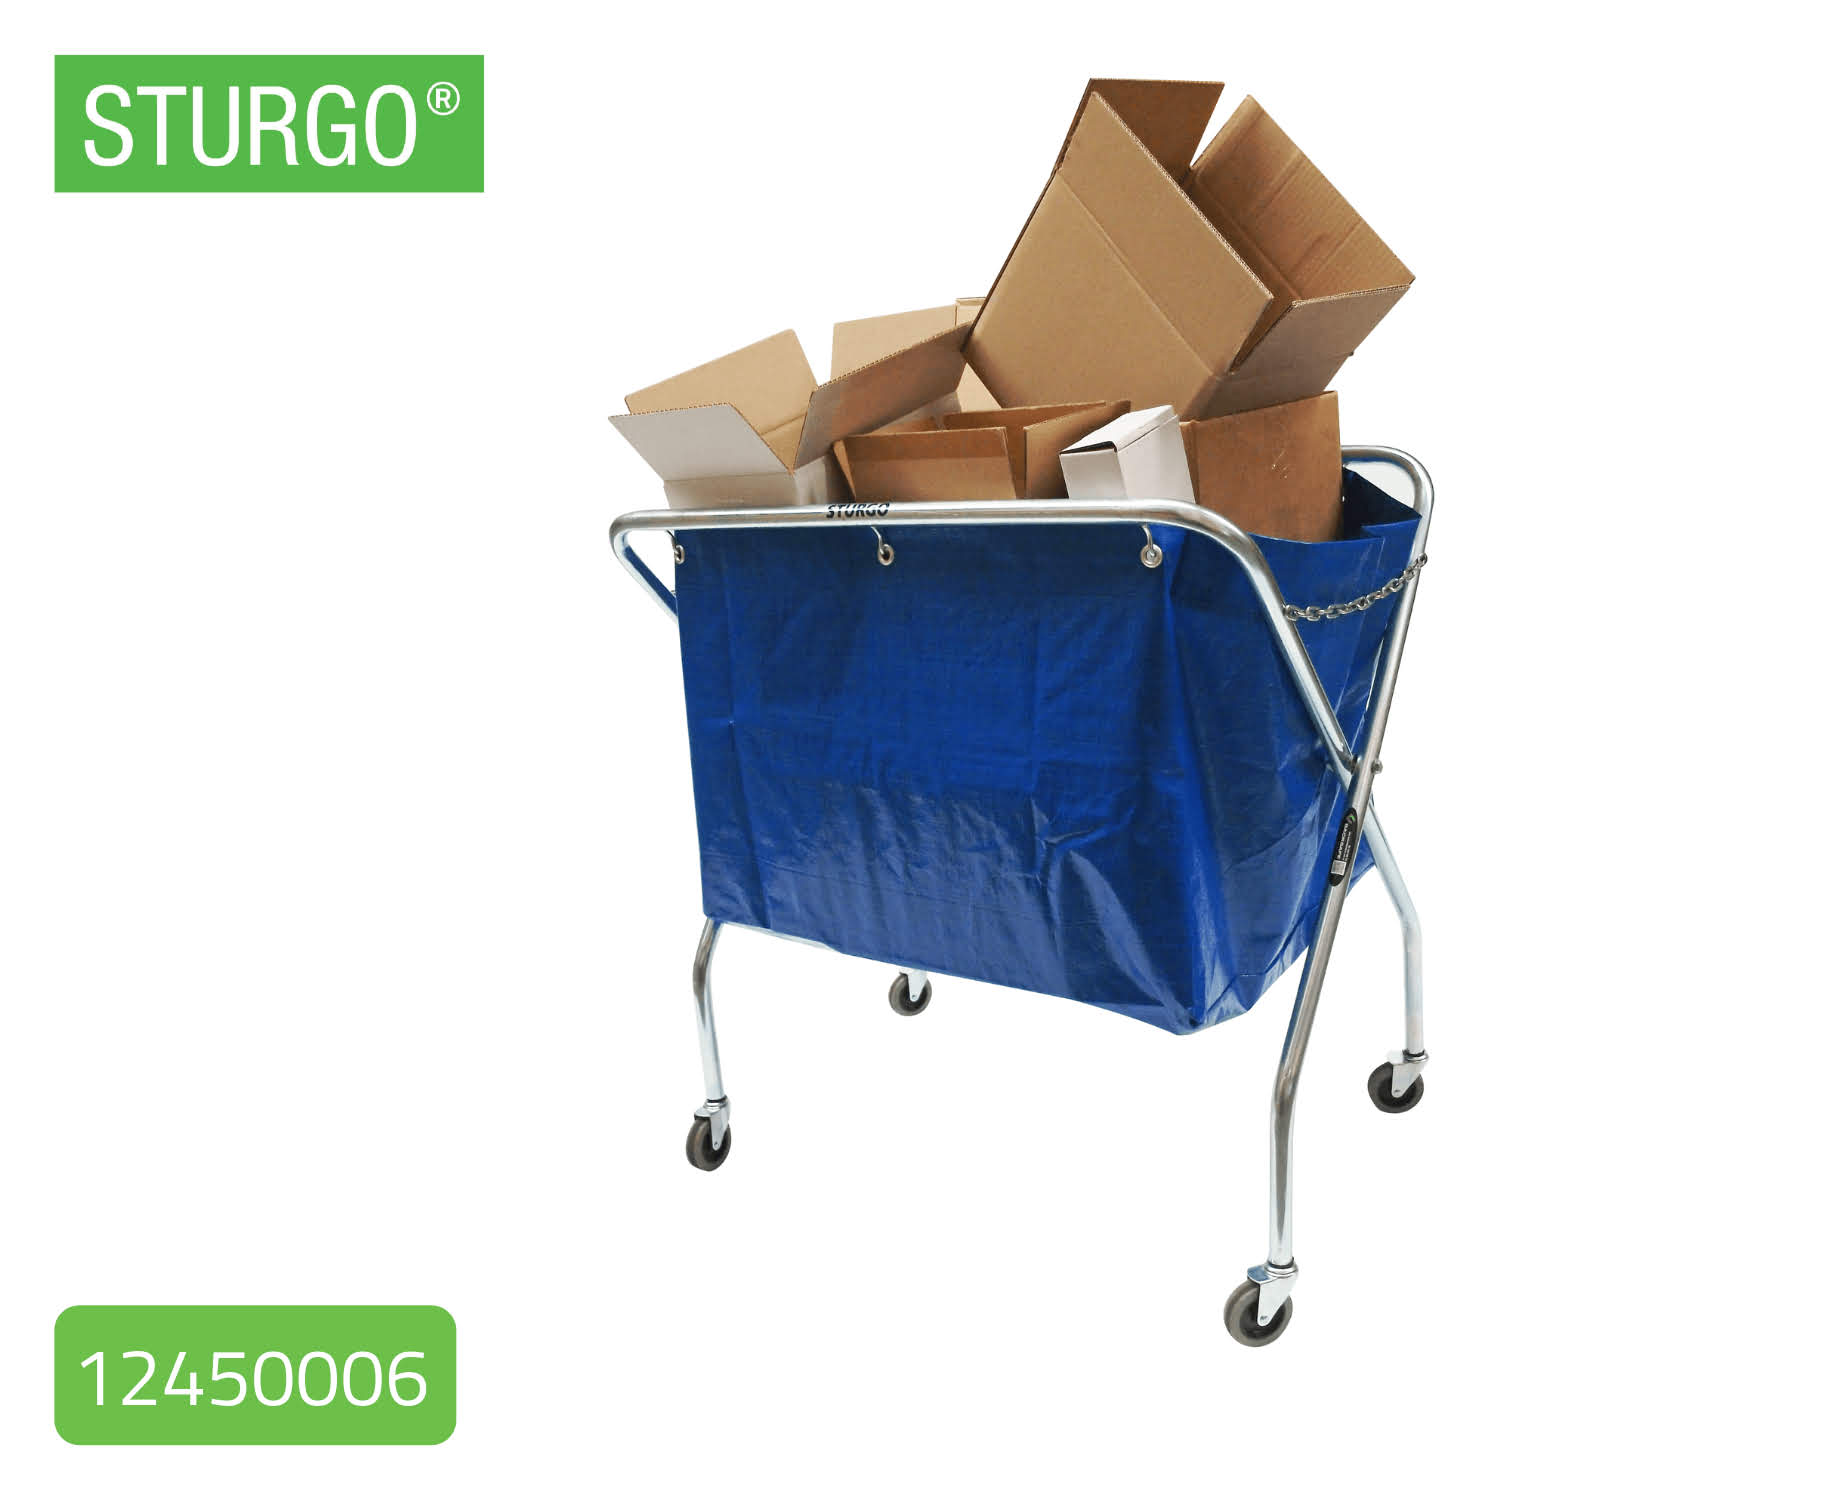 STURGO® Waste Trolley With Bag